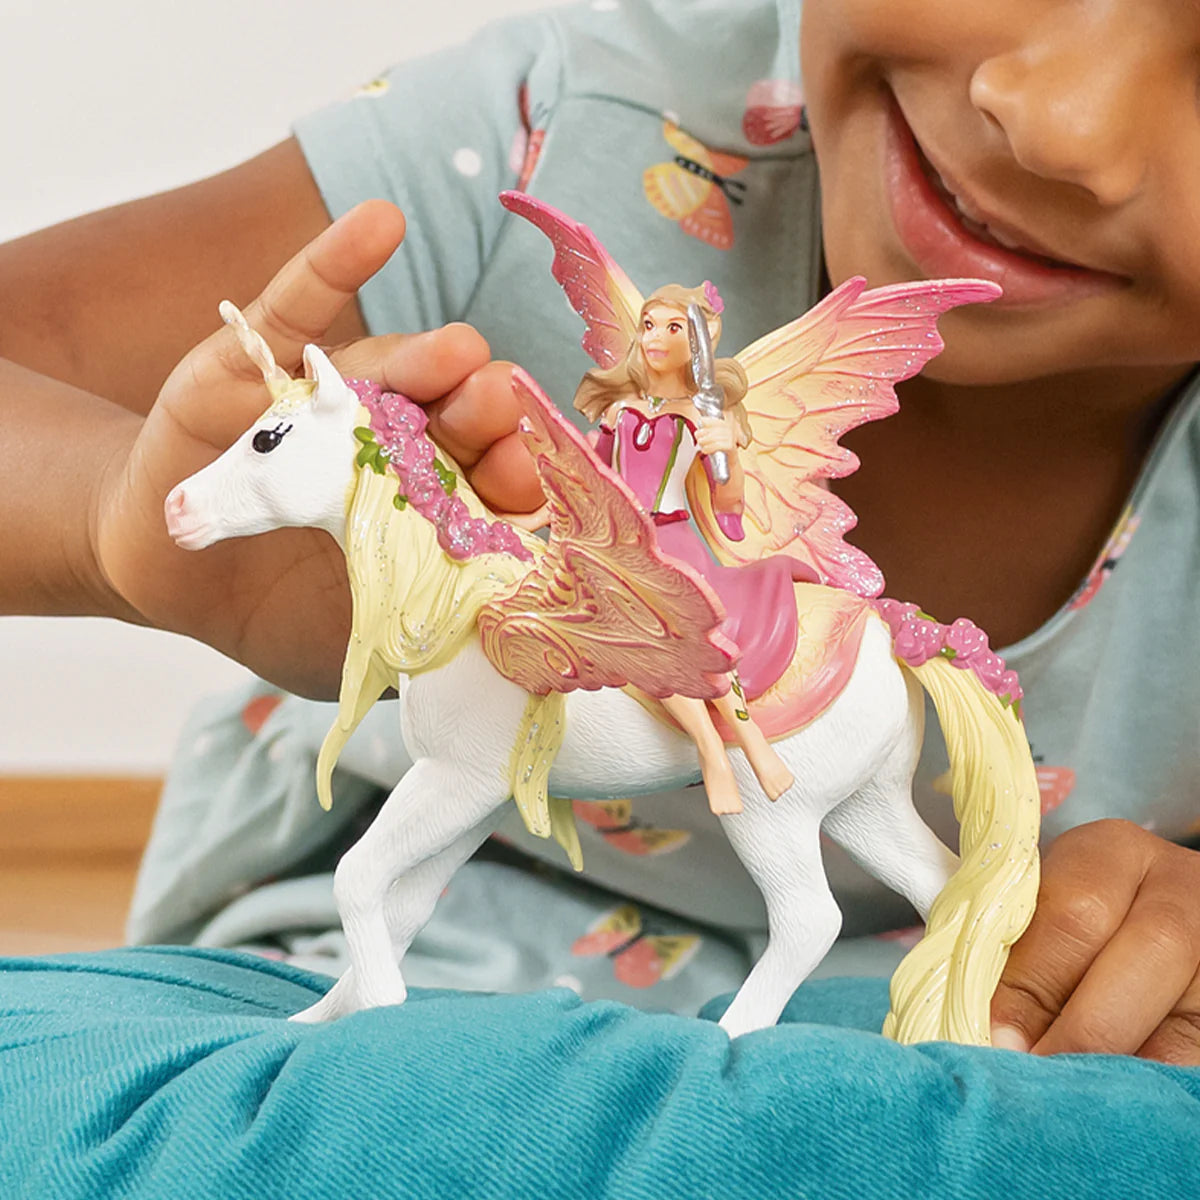 Fairy Feya with Pegasus Unicorn